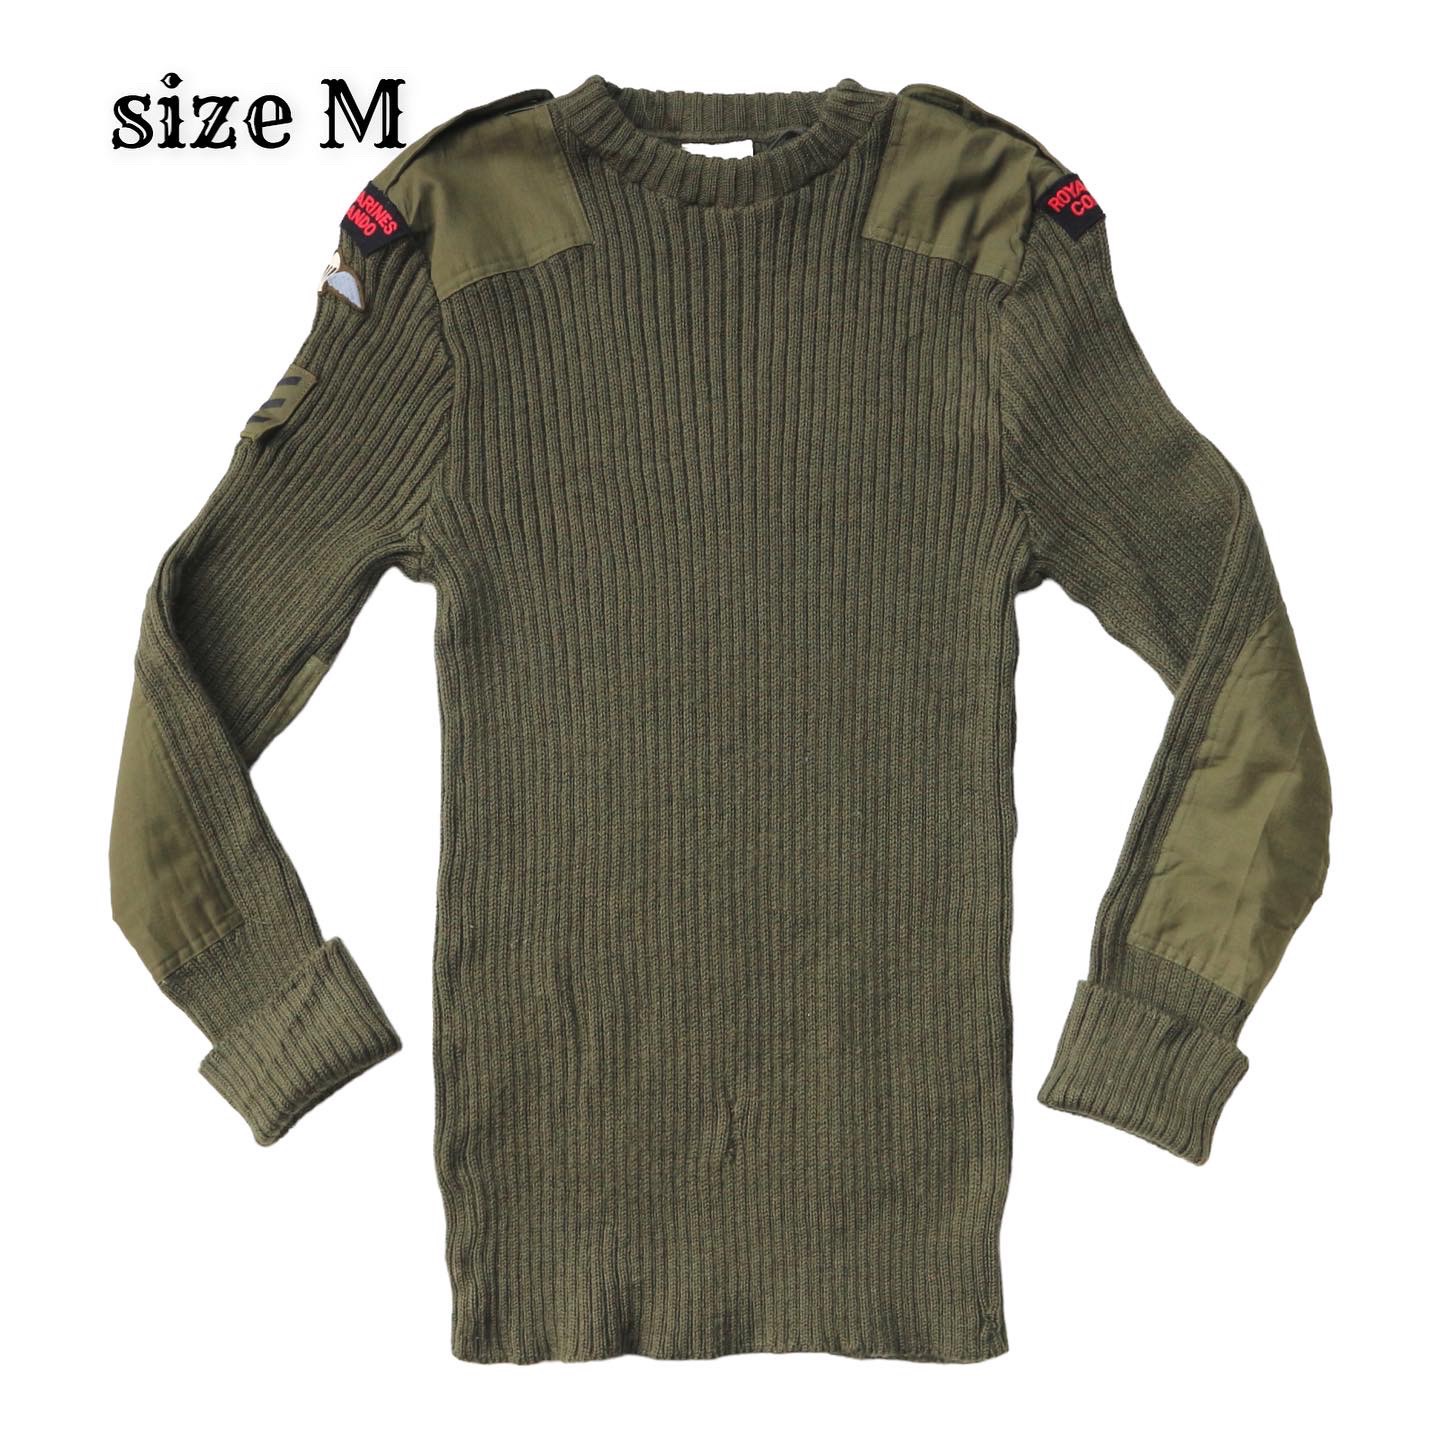 British Army Wool Combat Sweater Size M